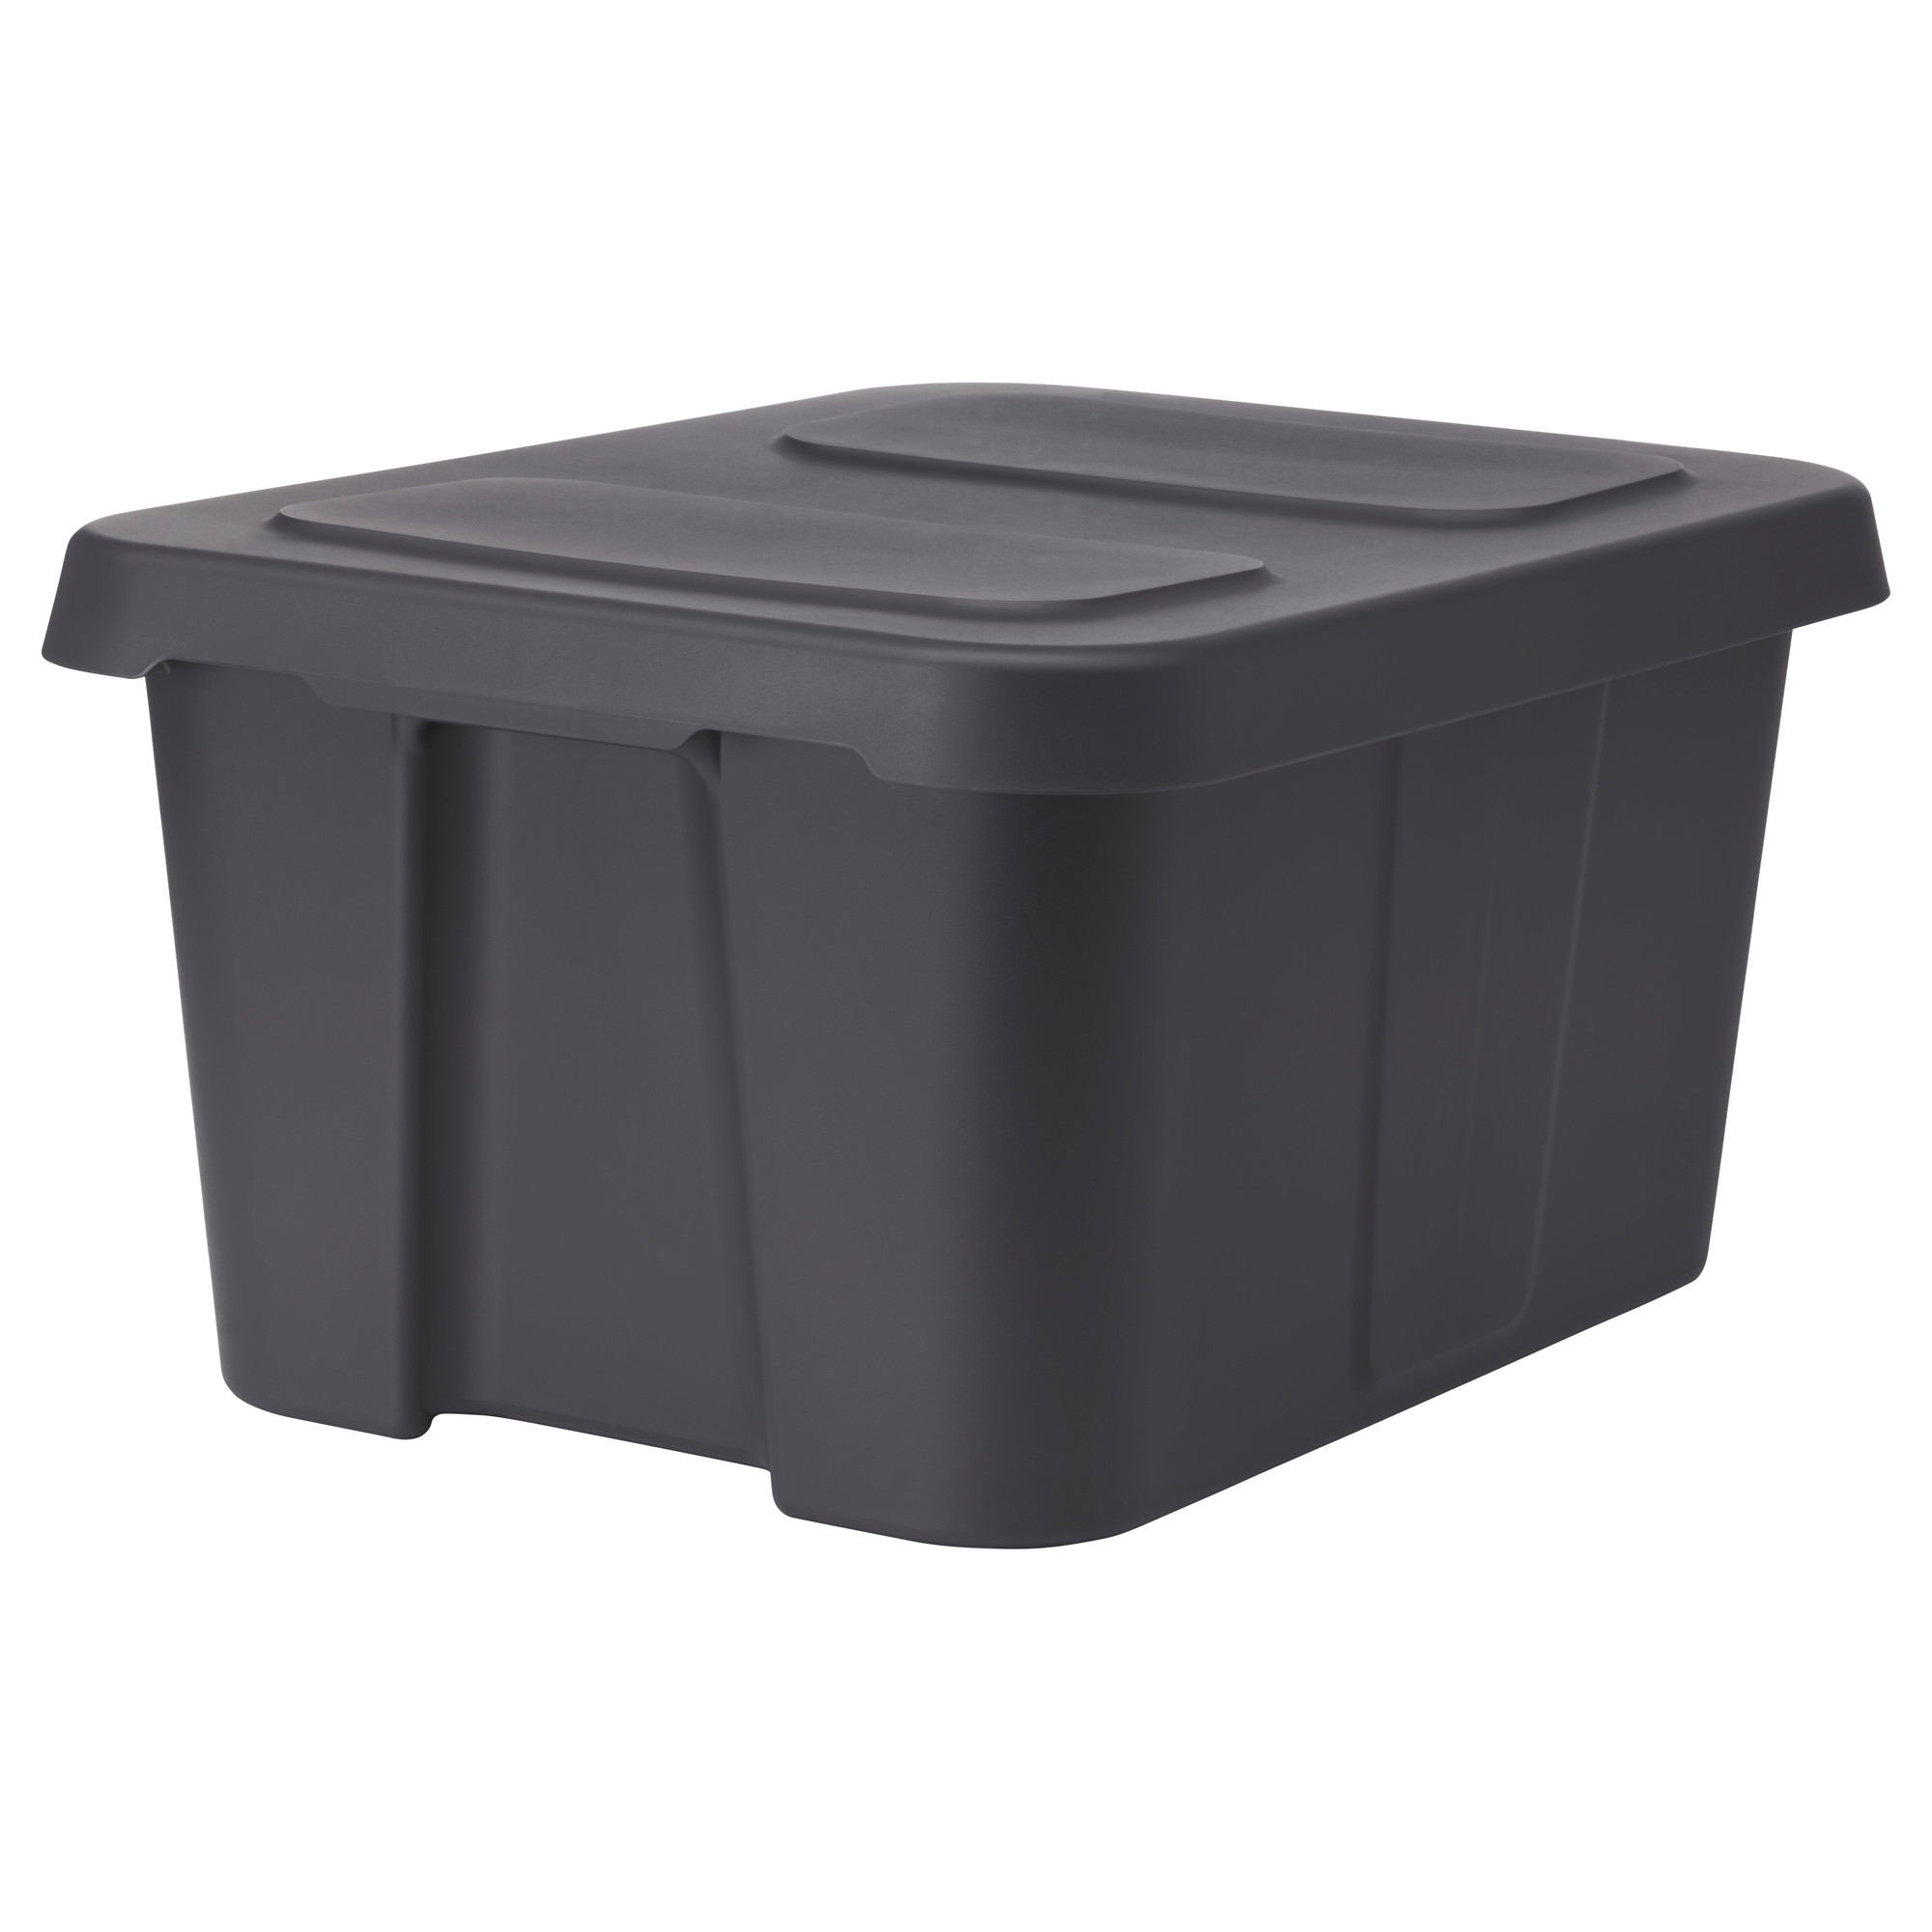 KLÄMTARE box with lid, in/outdoor